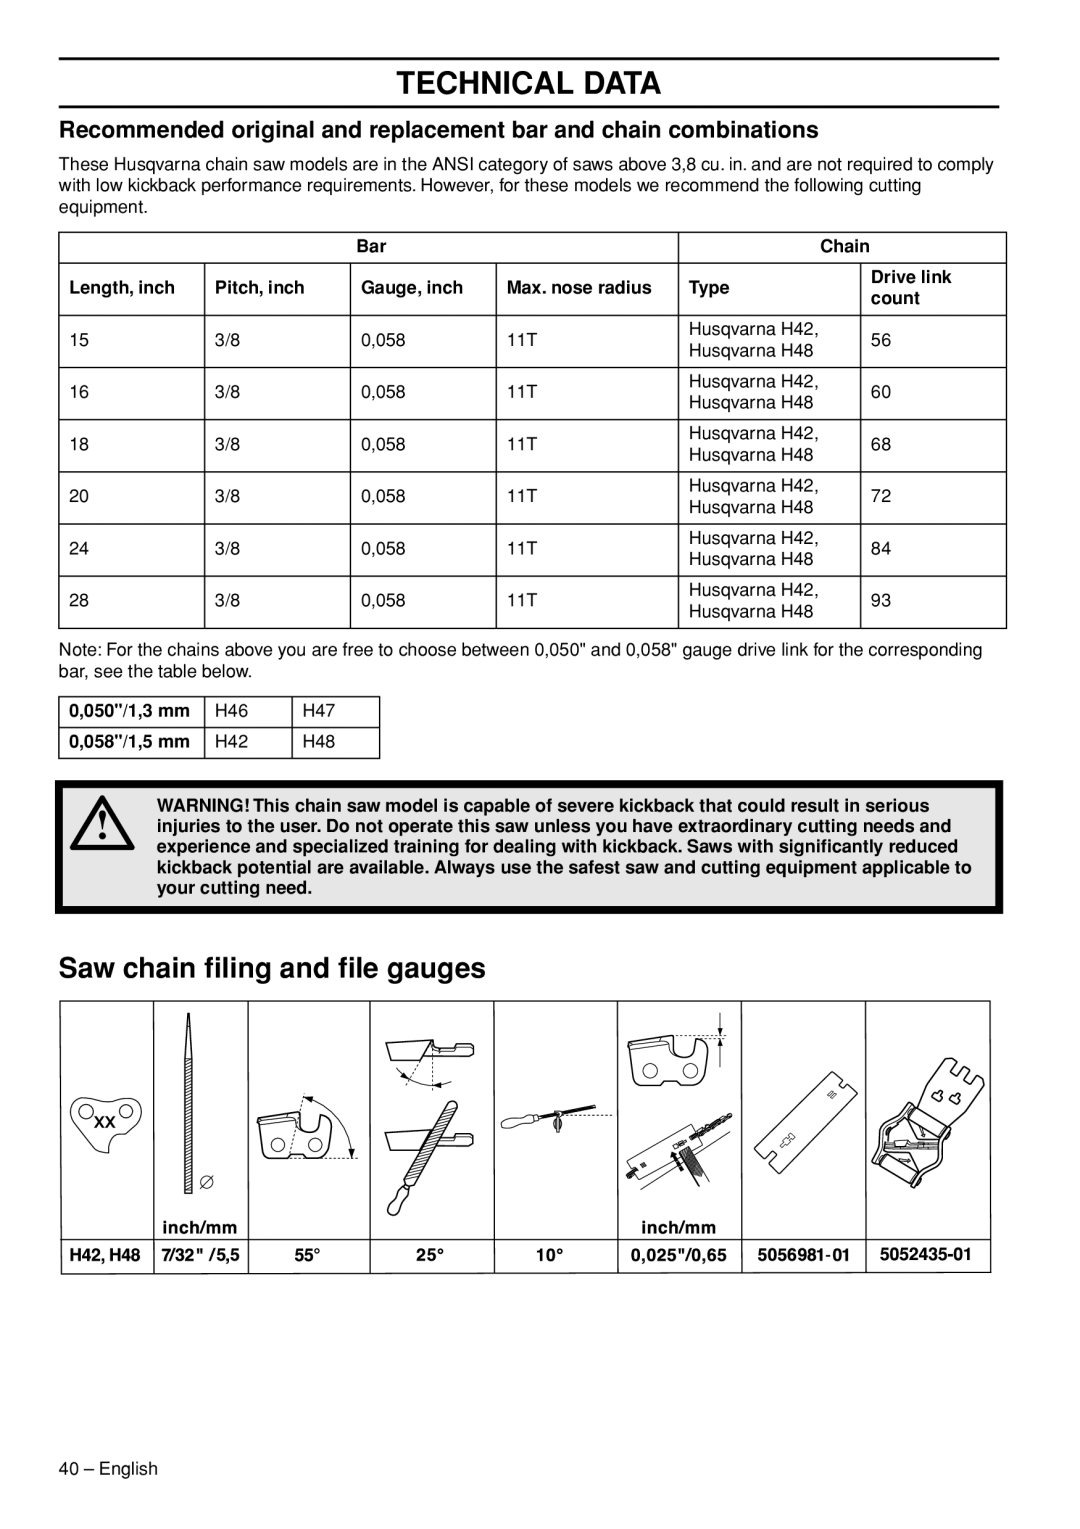 Husqvarna 372 XPG manual Saw chain ﬁling and ﬁle gauges, Technical Data 